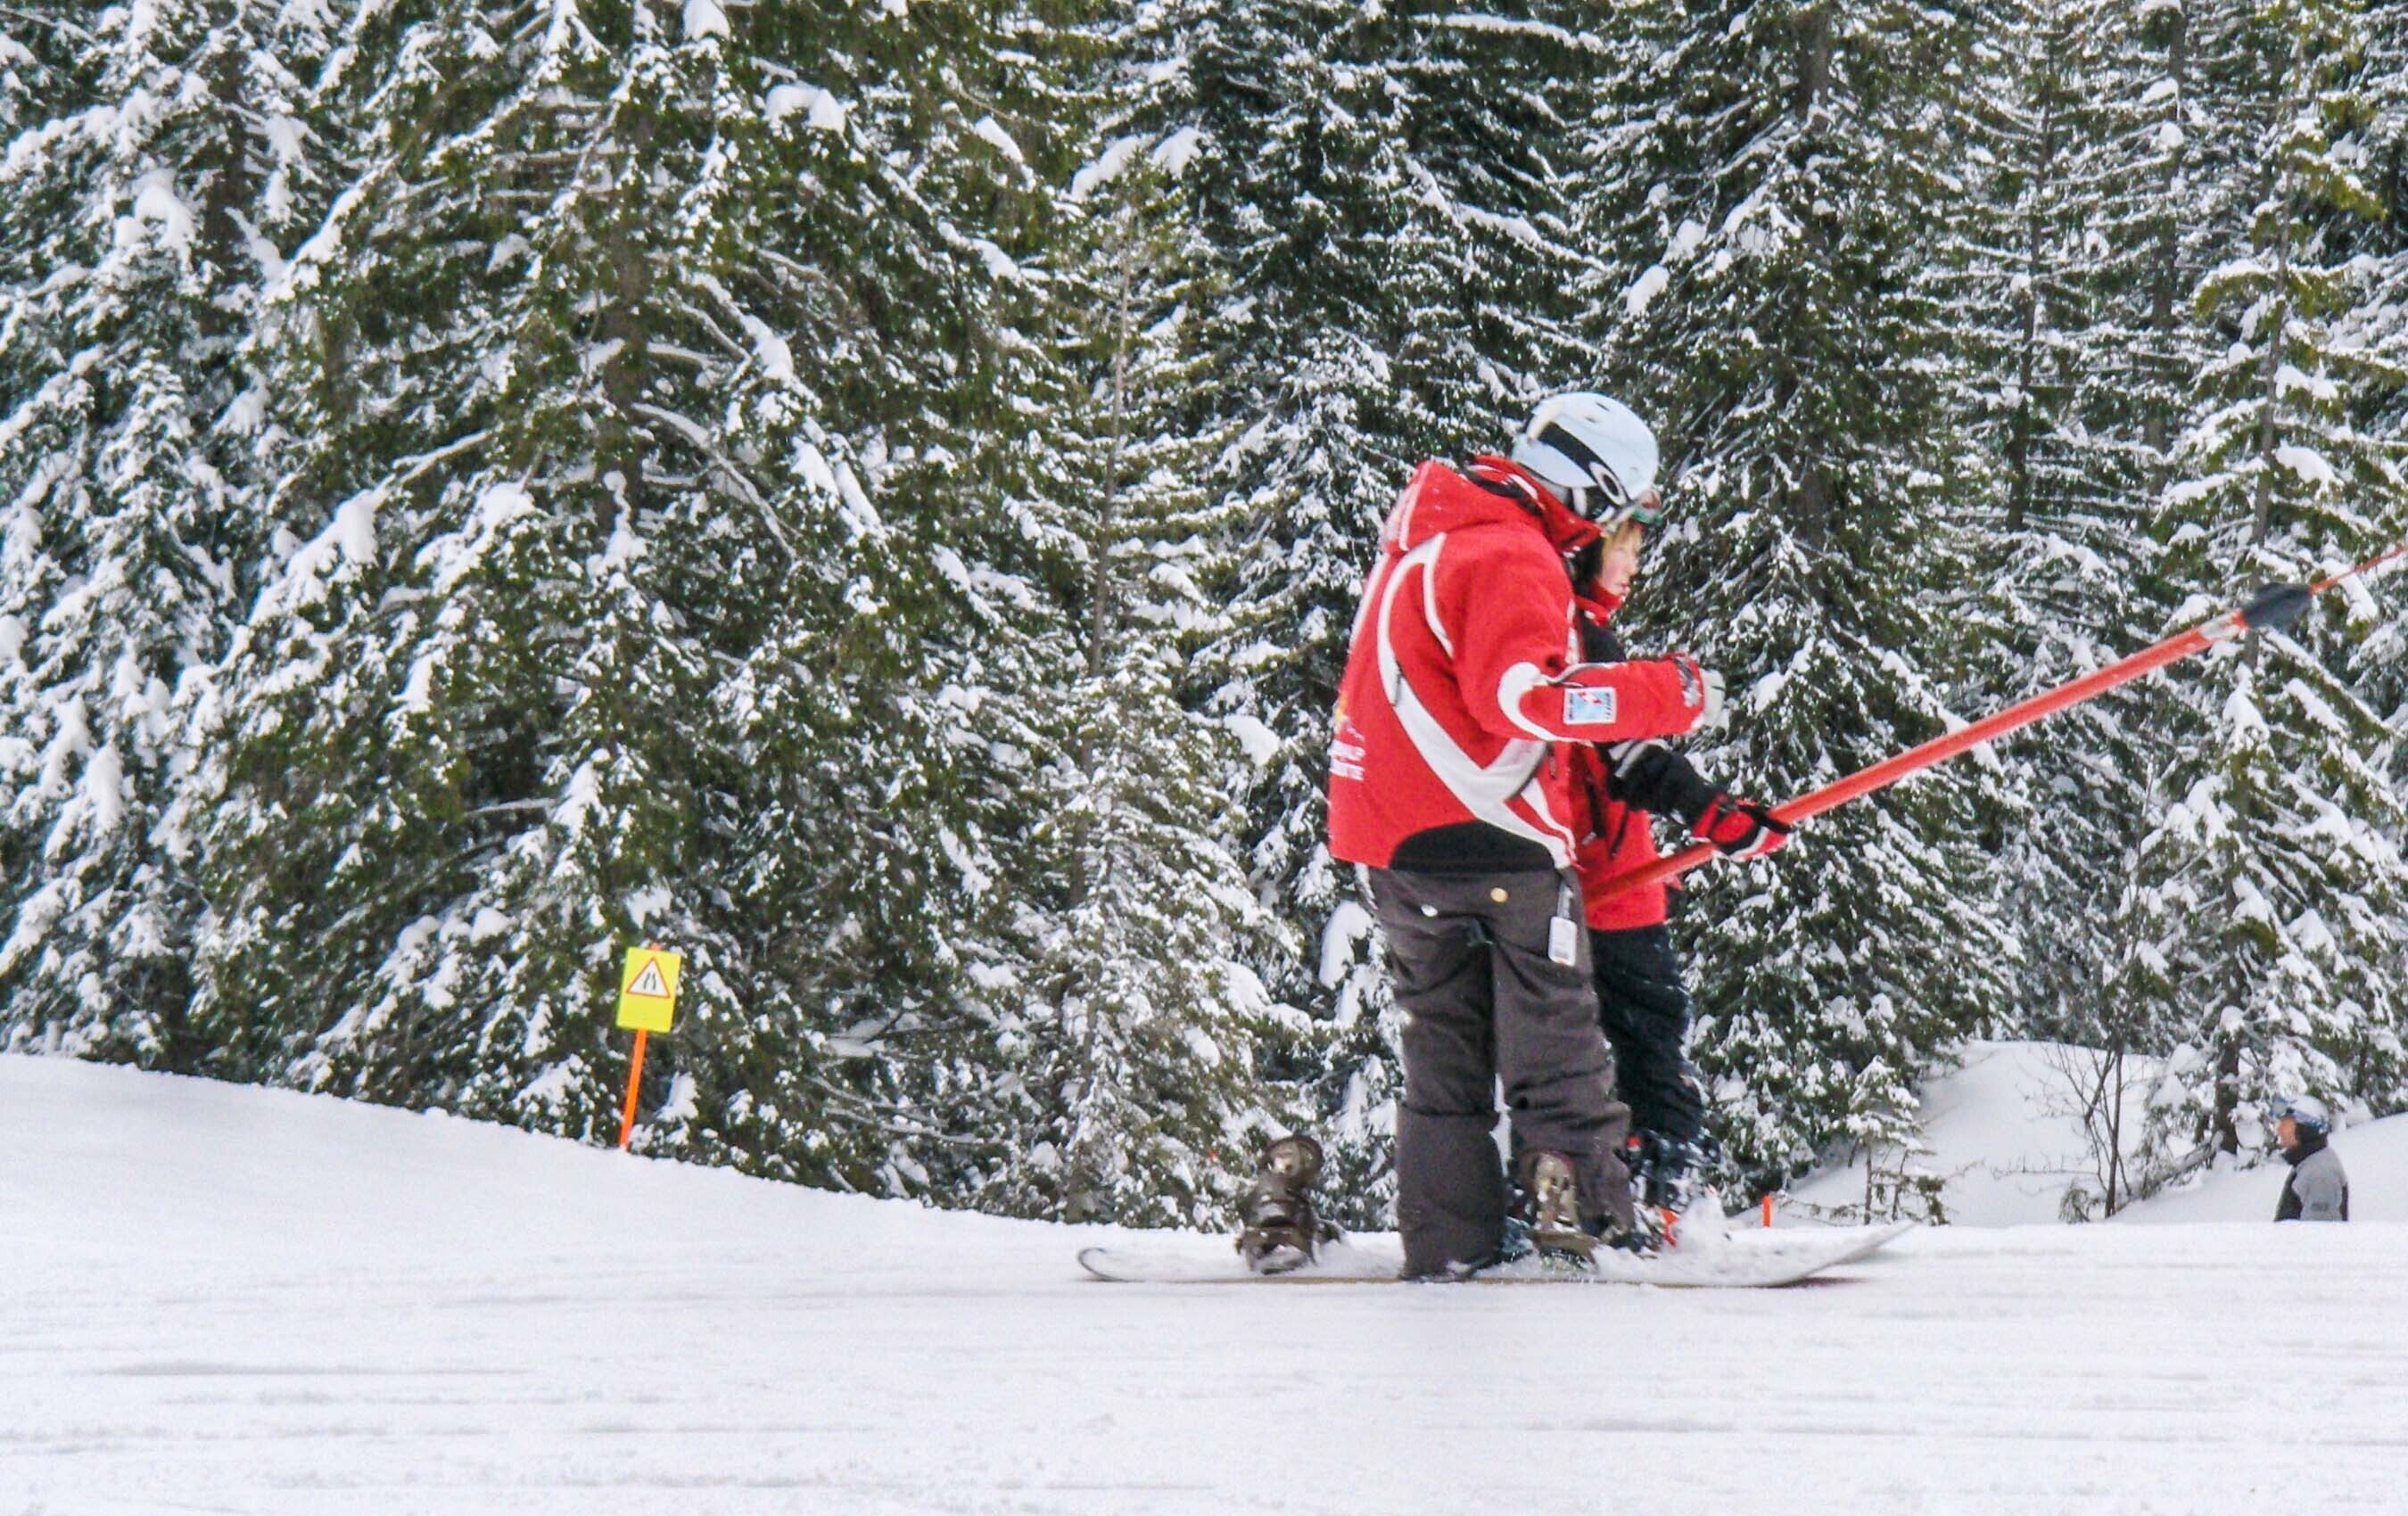 Unterricht skischule snowboardschule klewenalp stockhuette 07